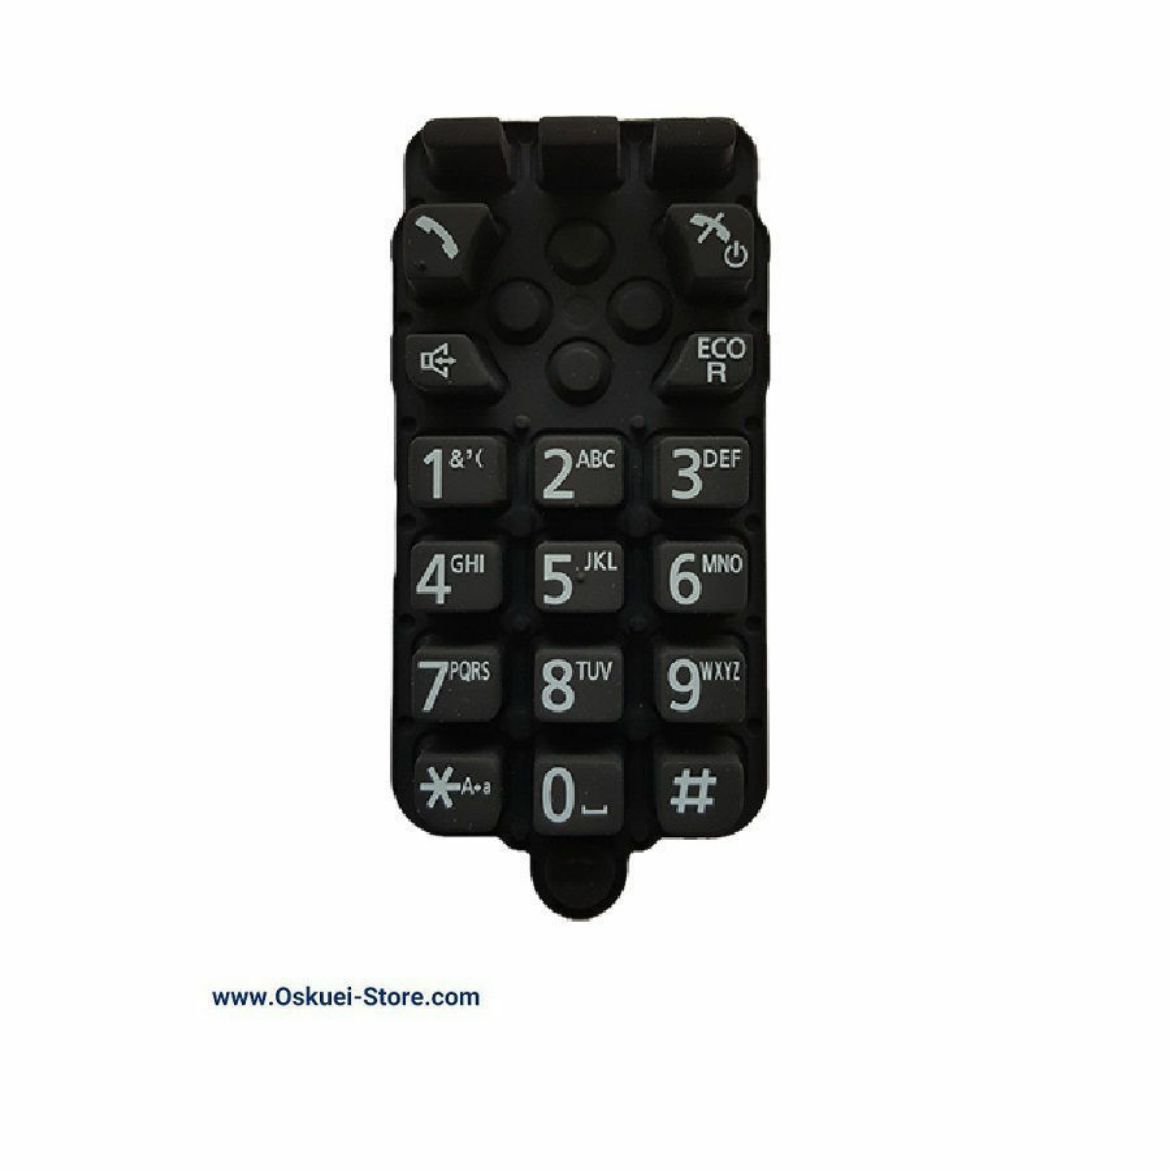 Panasonic Keypad For Panasonic KX-TG2511 Model Numbers